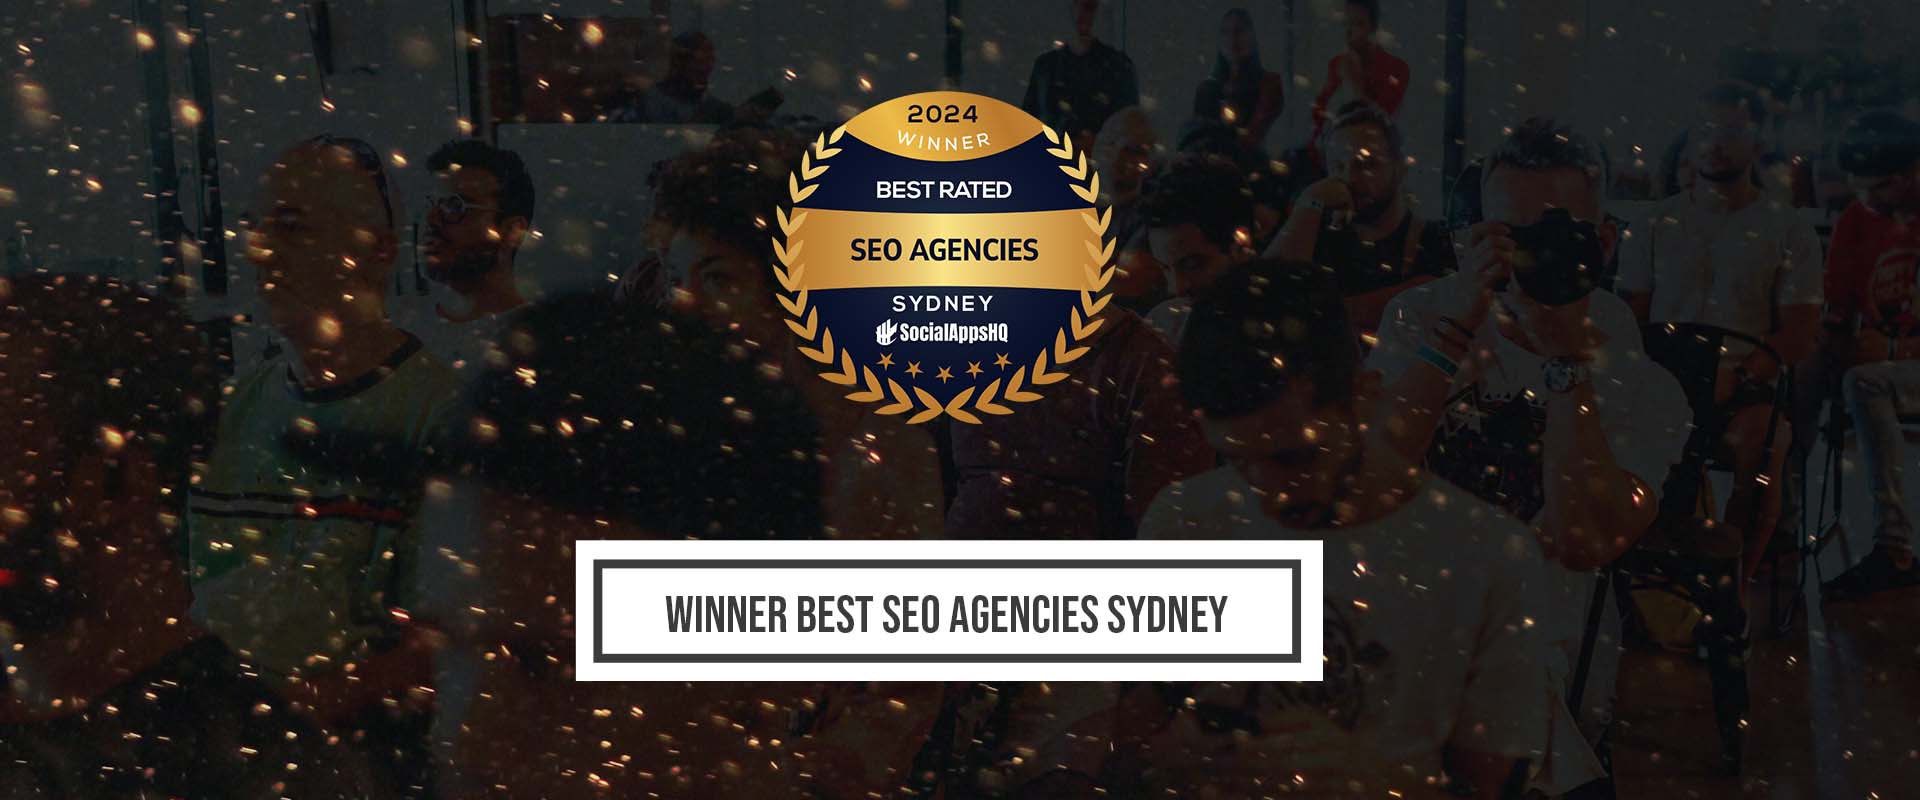 Award for Best SEO Agency Sydney From Social Apps HQ